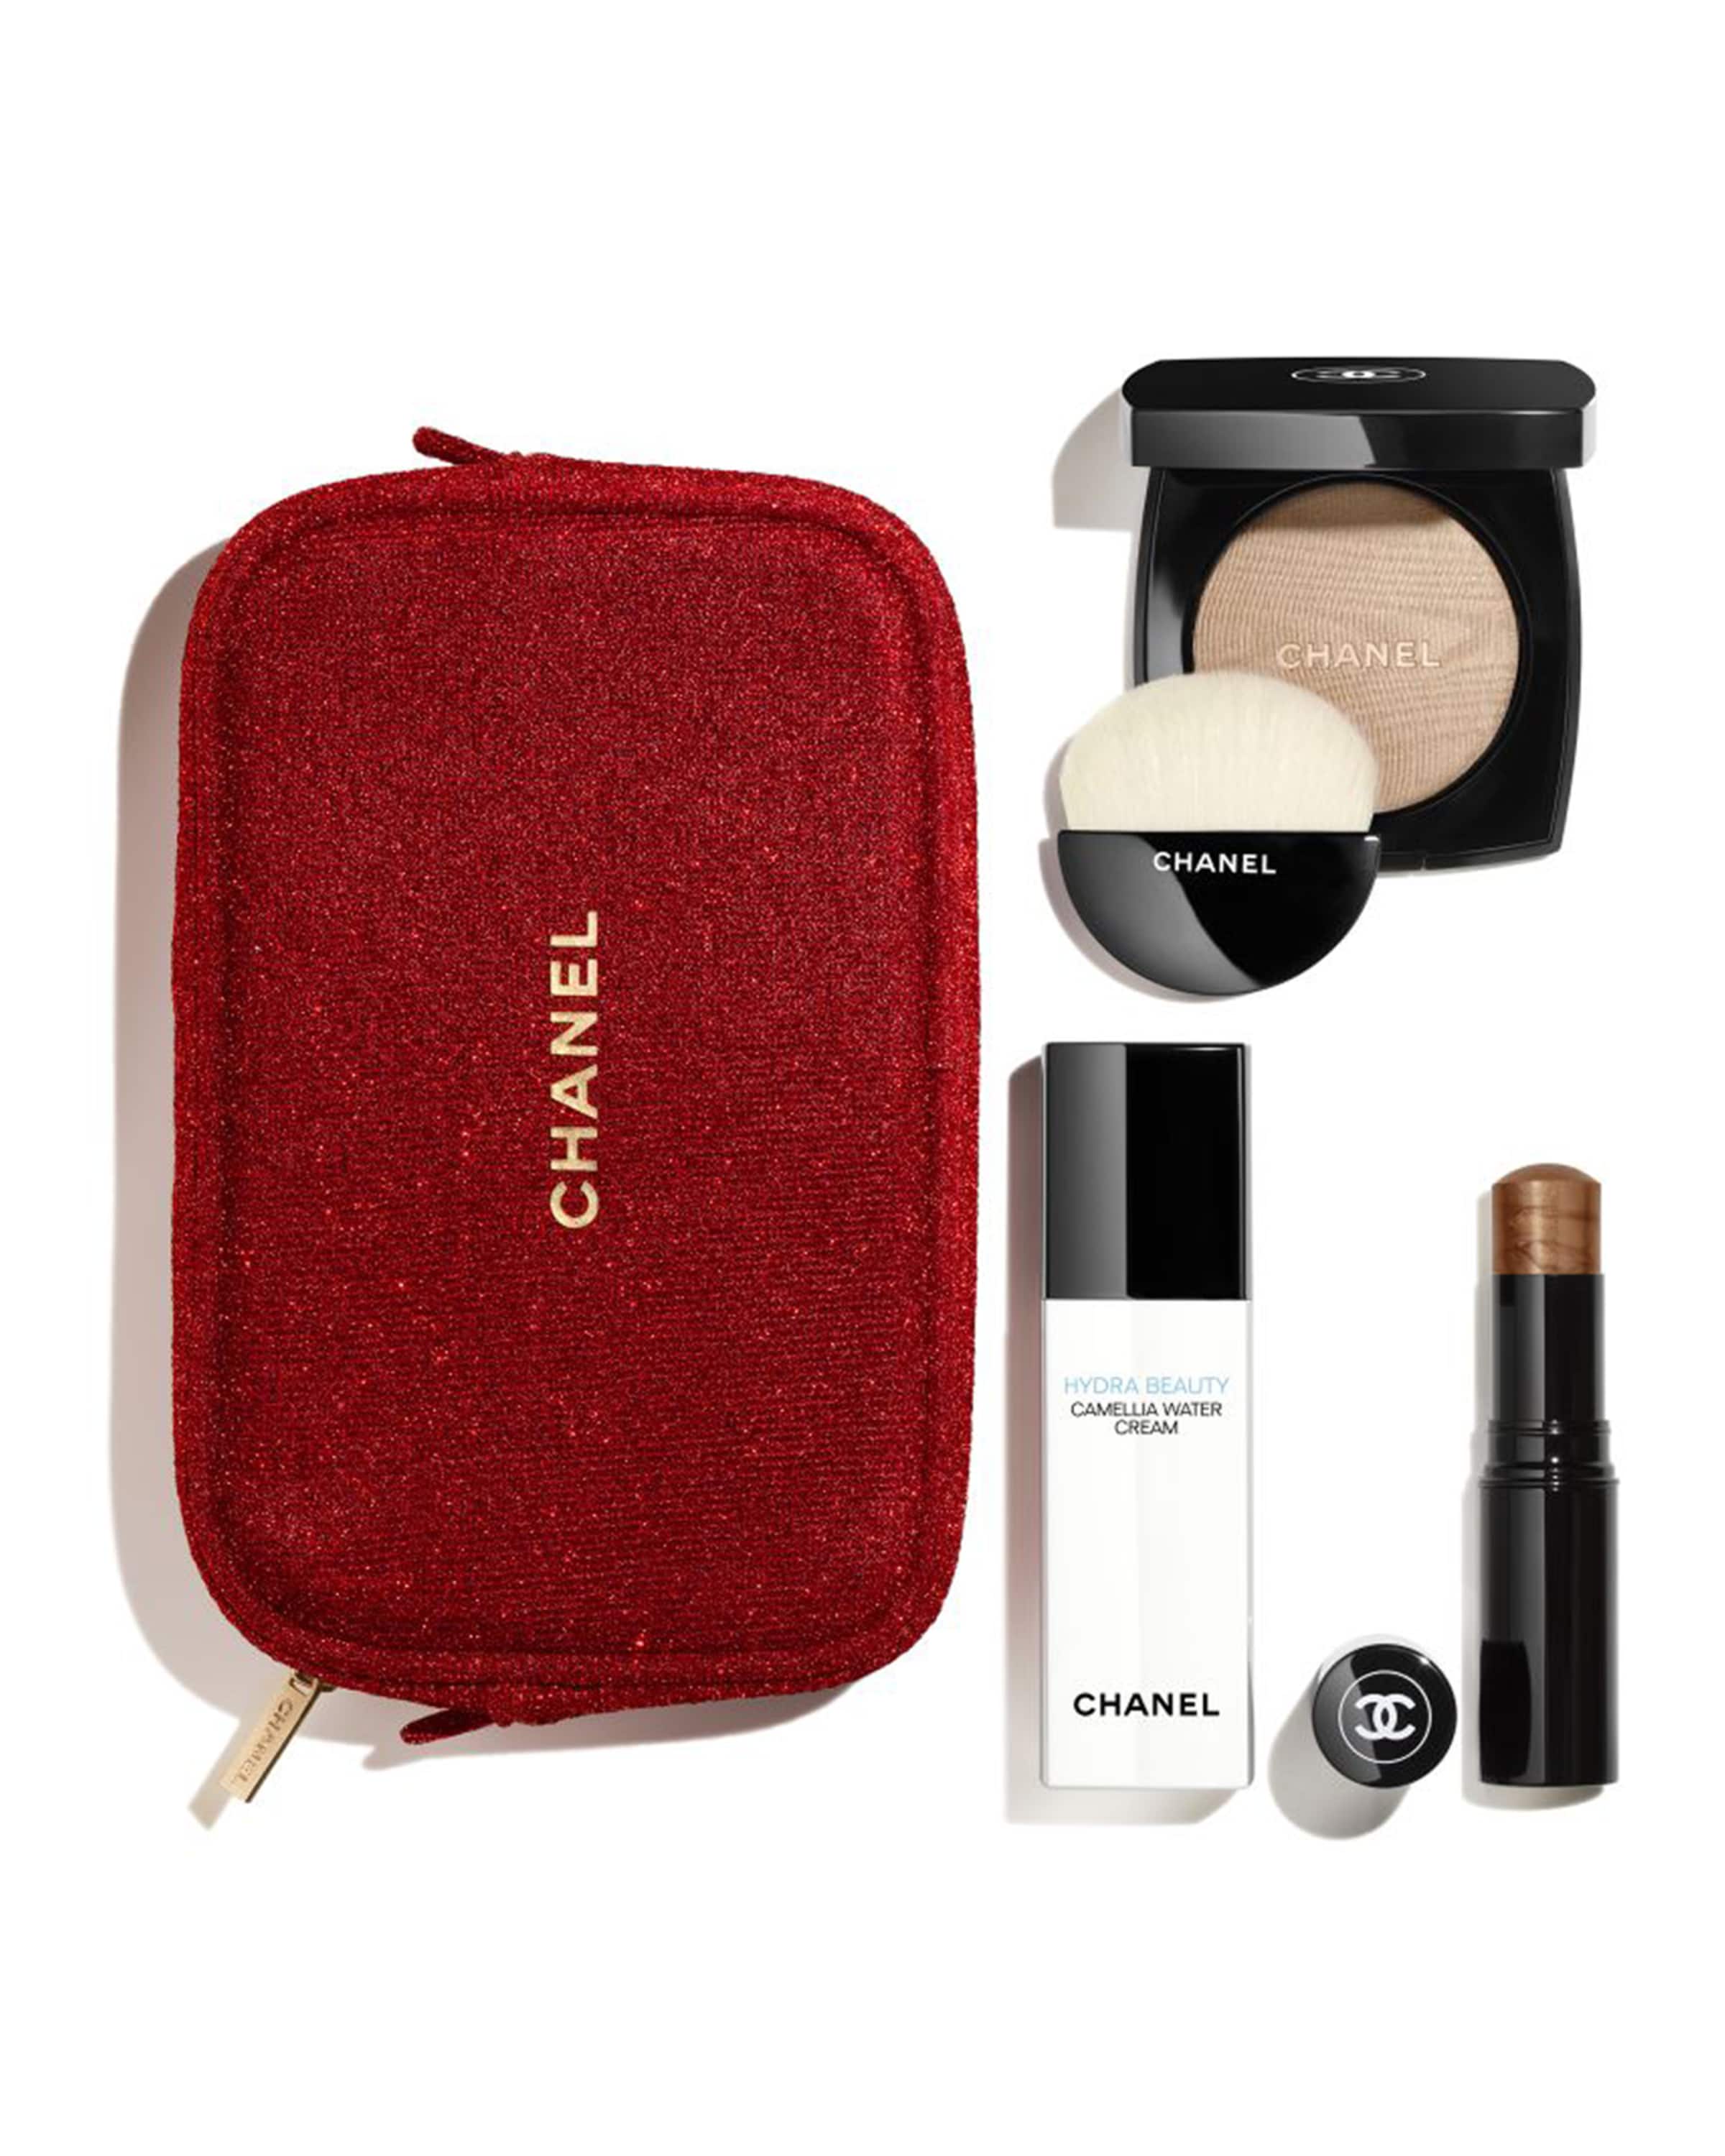 CHANEL INSTANT ILLUMINATION Beauty Set - Limited Edition | Neiman Marcus